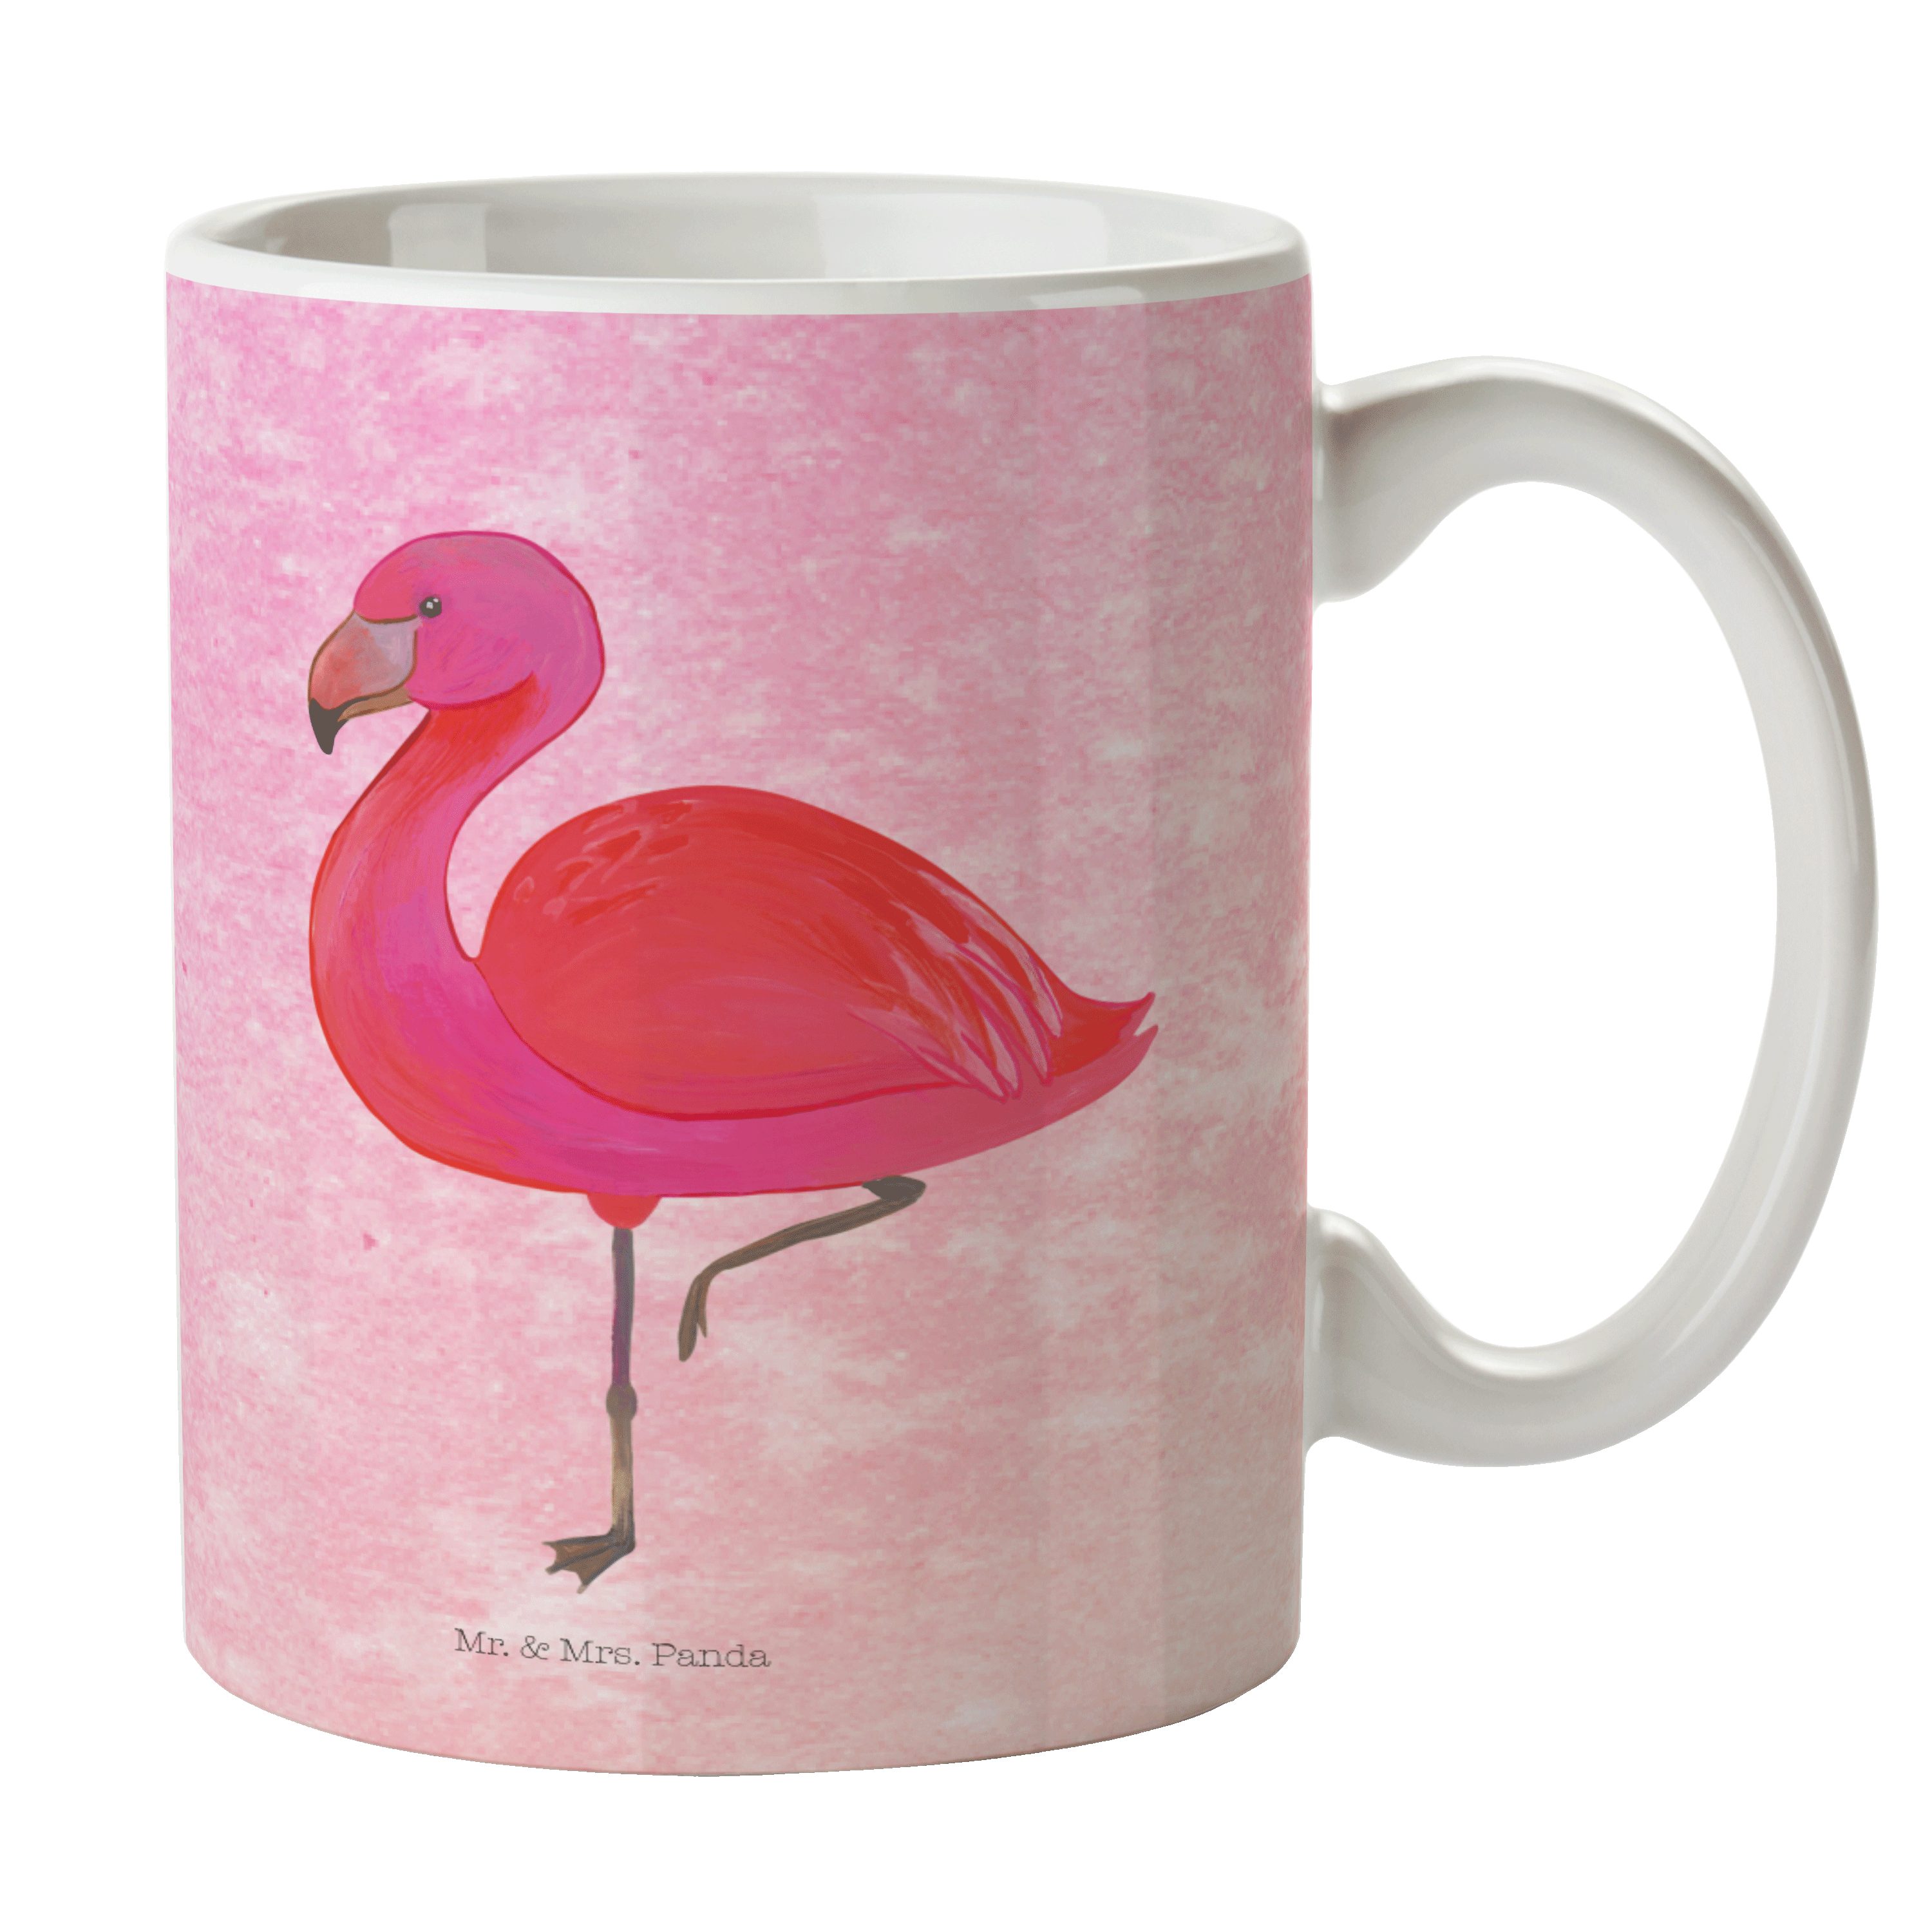 Mr. & Mrs. Panda Tasse Flamingo classic - Aquarell Pink - Geschenk, Kaffeetasse, einzigartig, Keramik